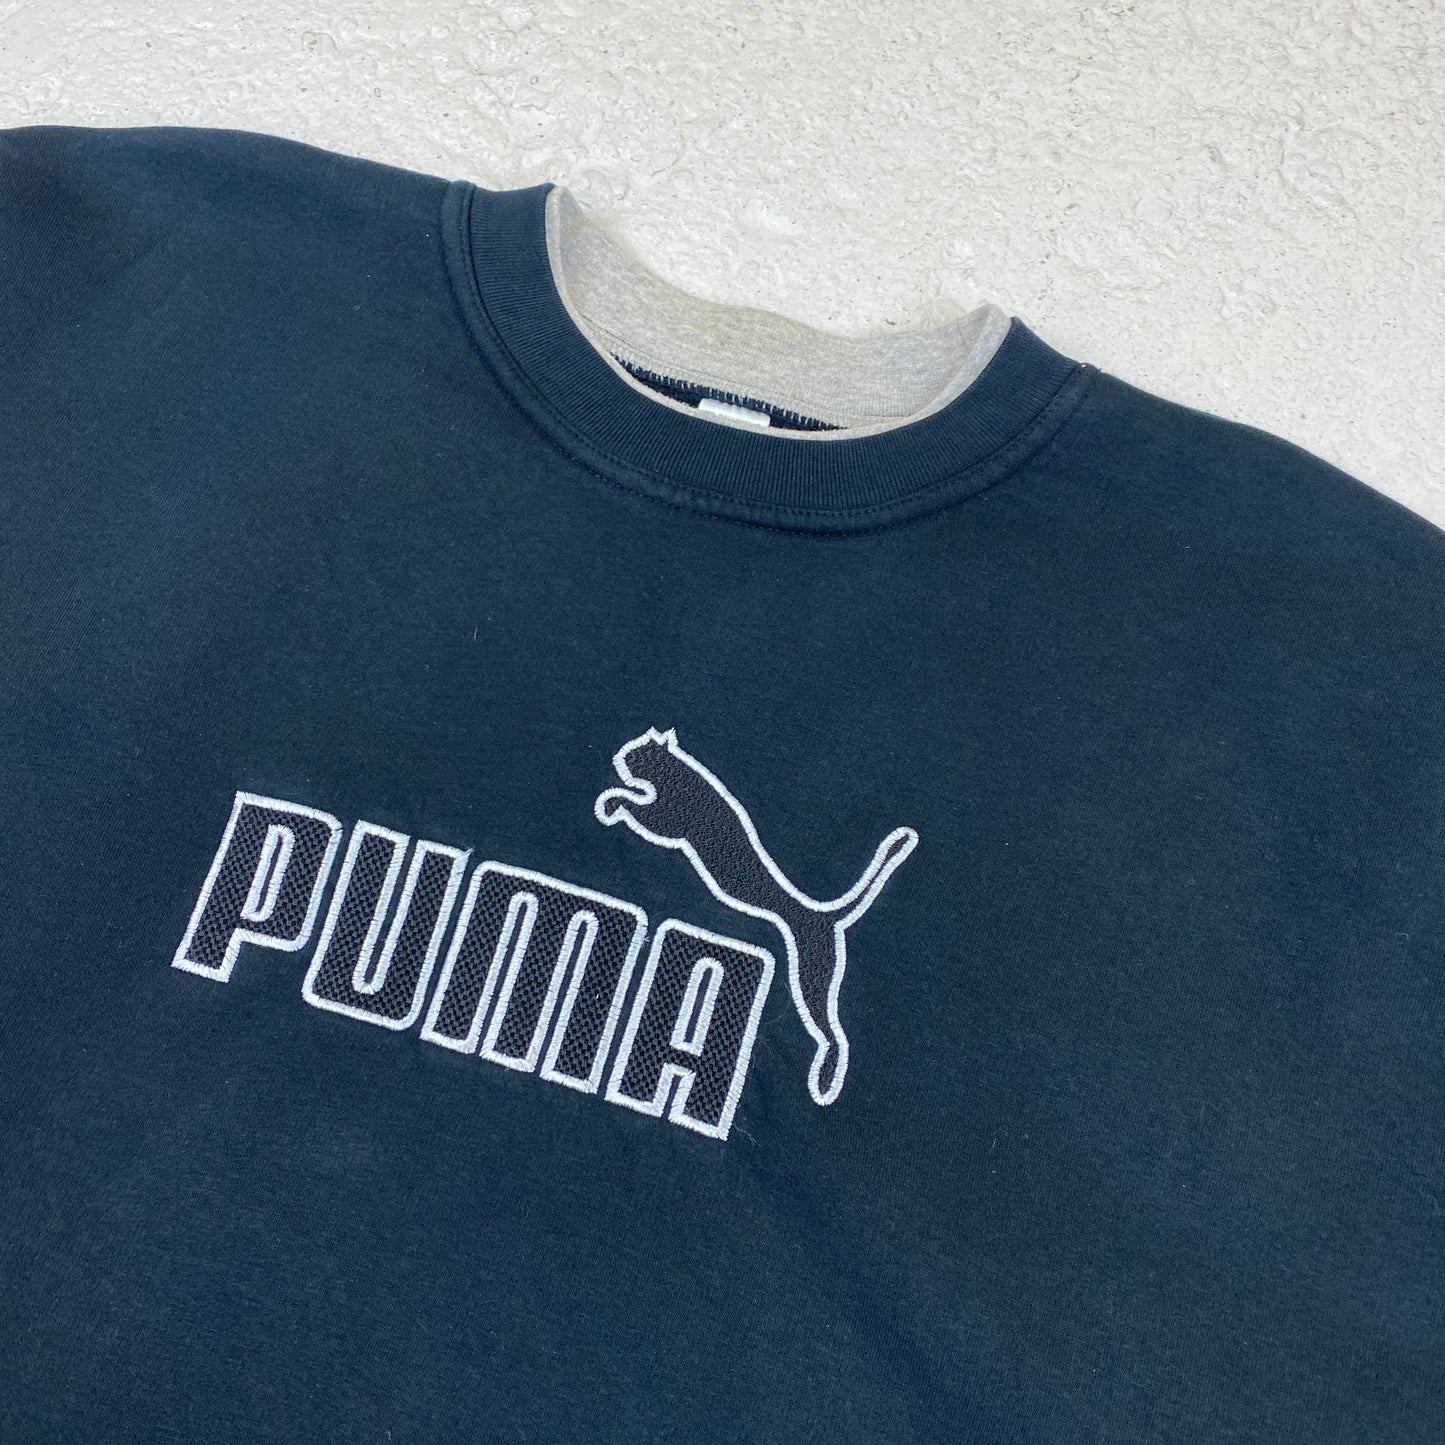 Puma heavyweight embroidered sweater (L)